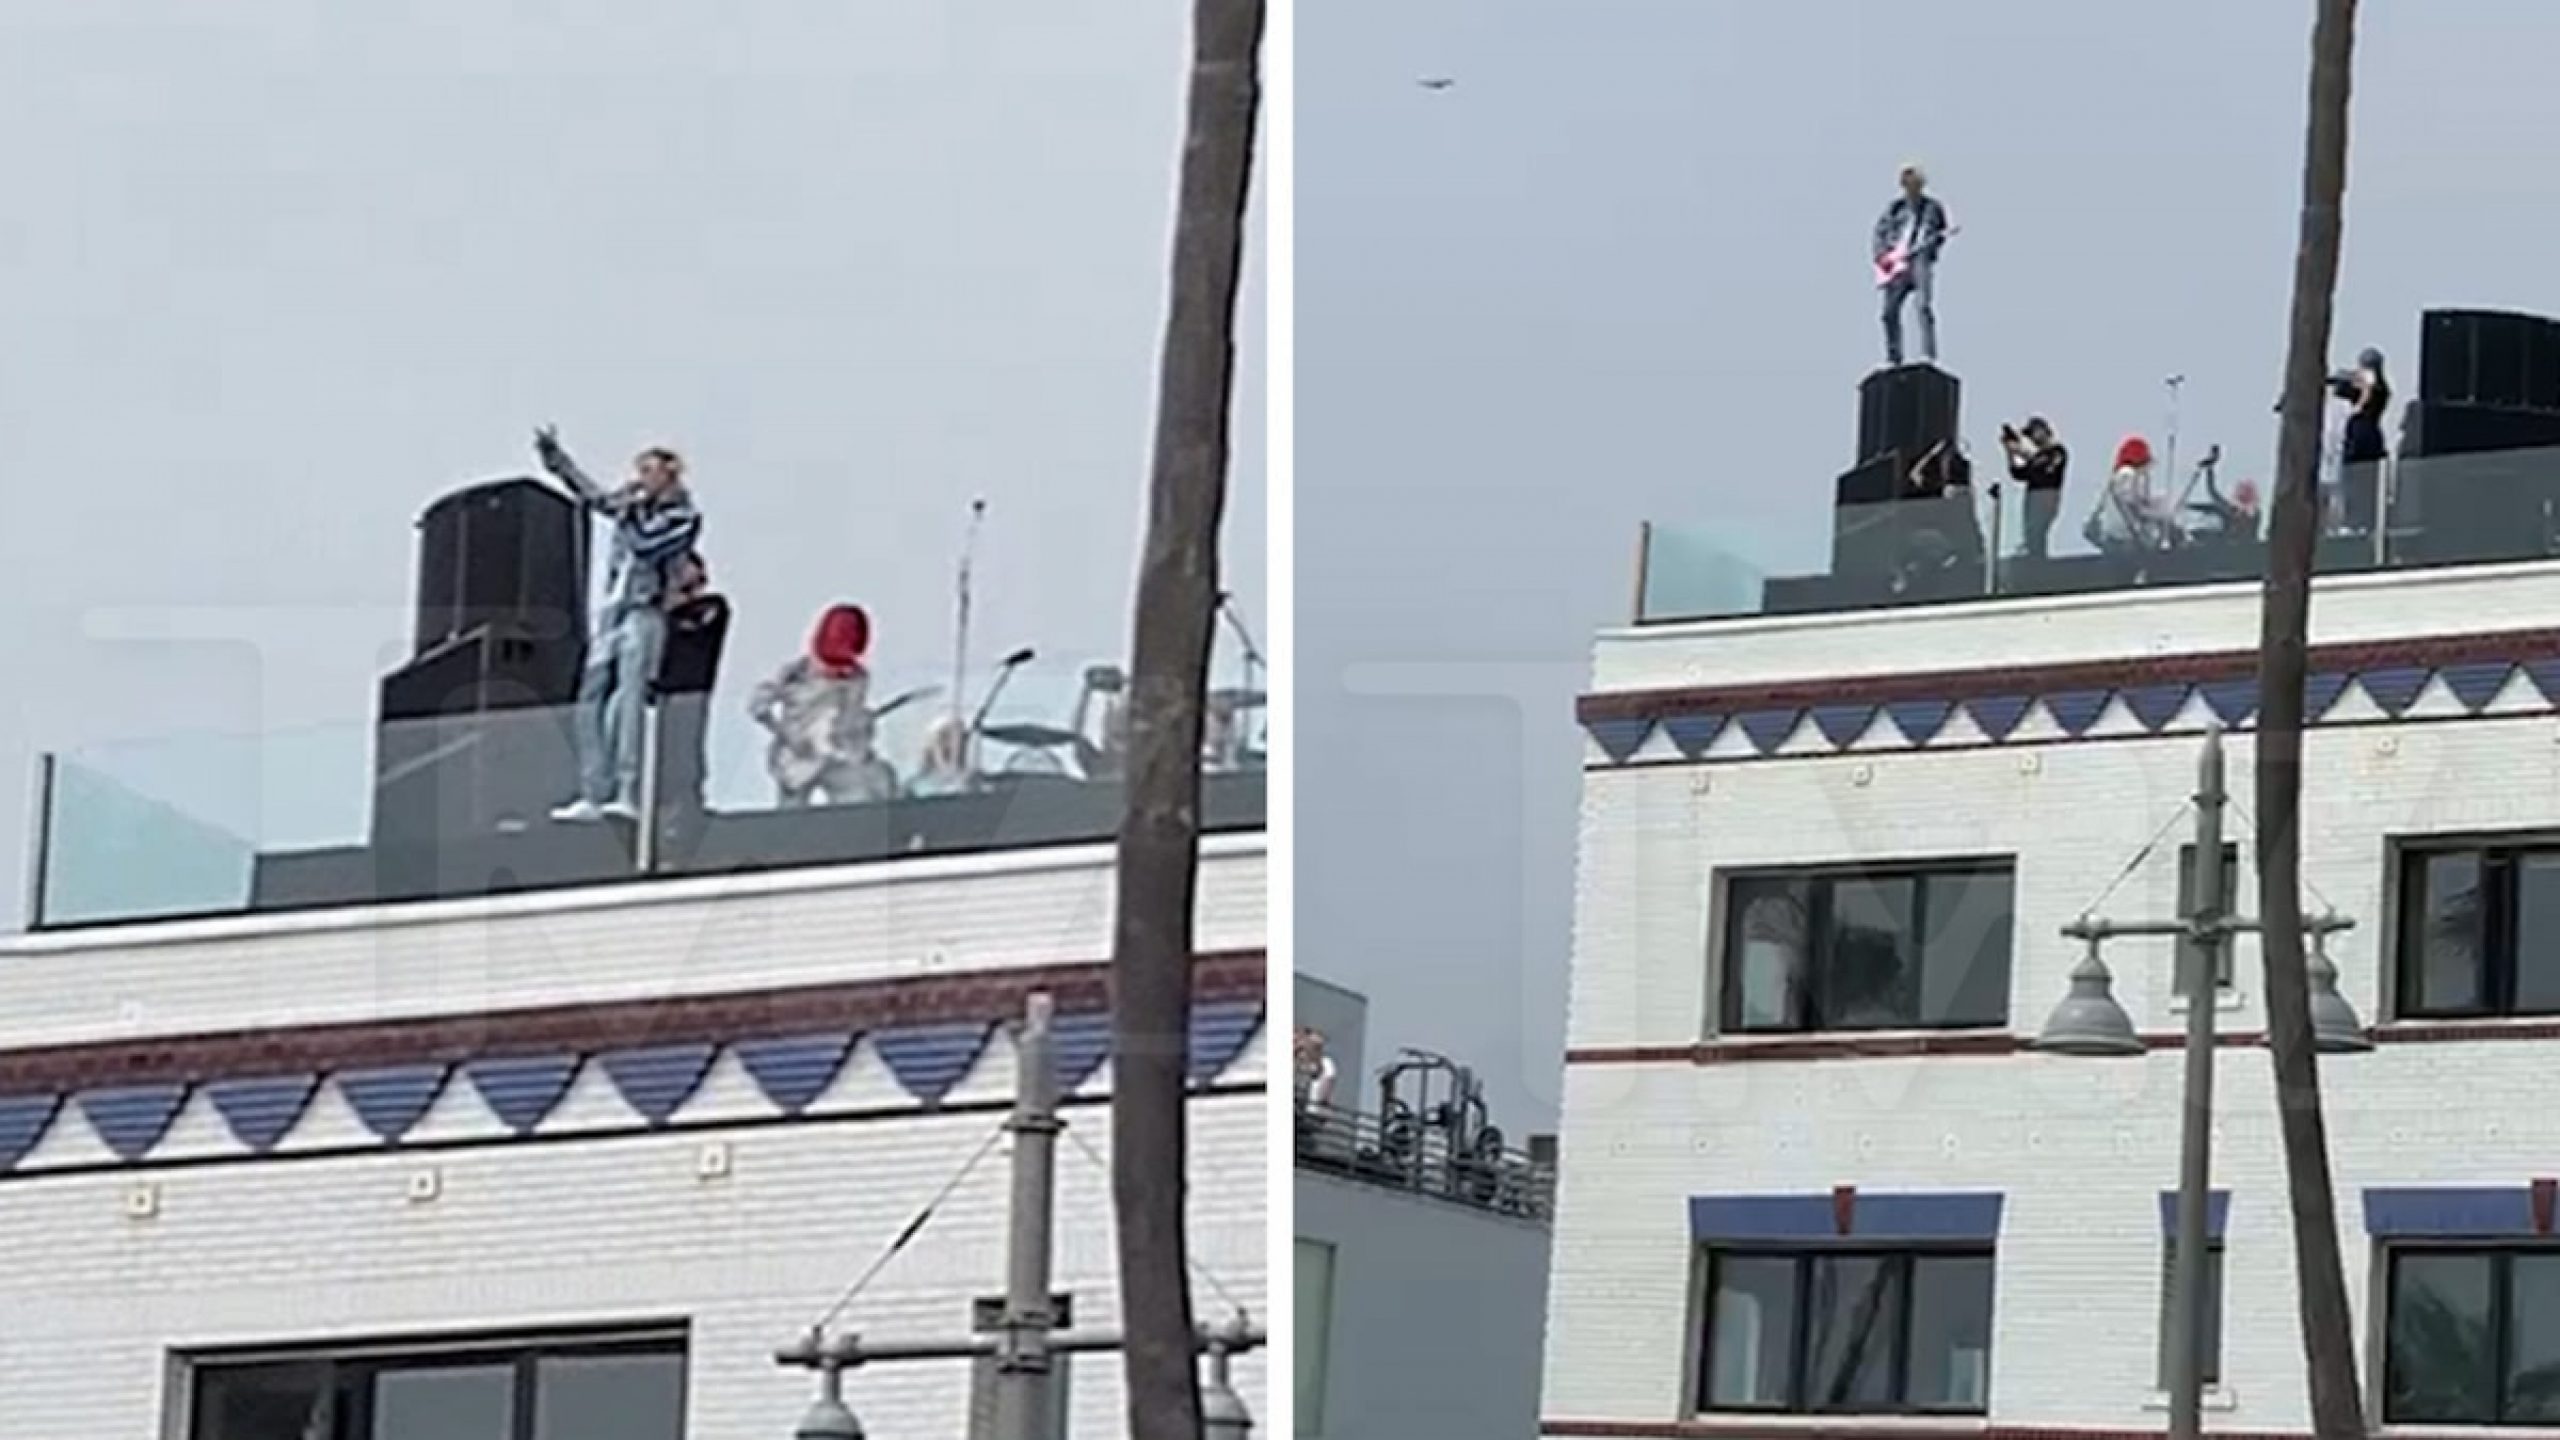 MGK, Travis Barker’s Rooftop Performance Looked Kinda Dangerous